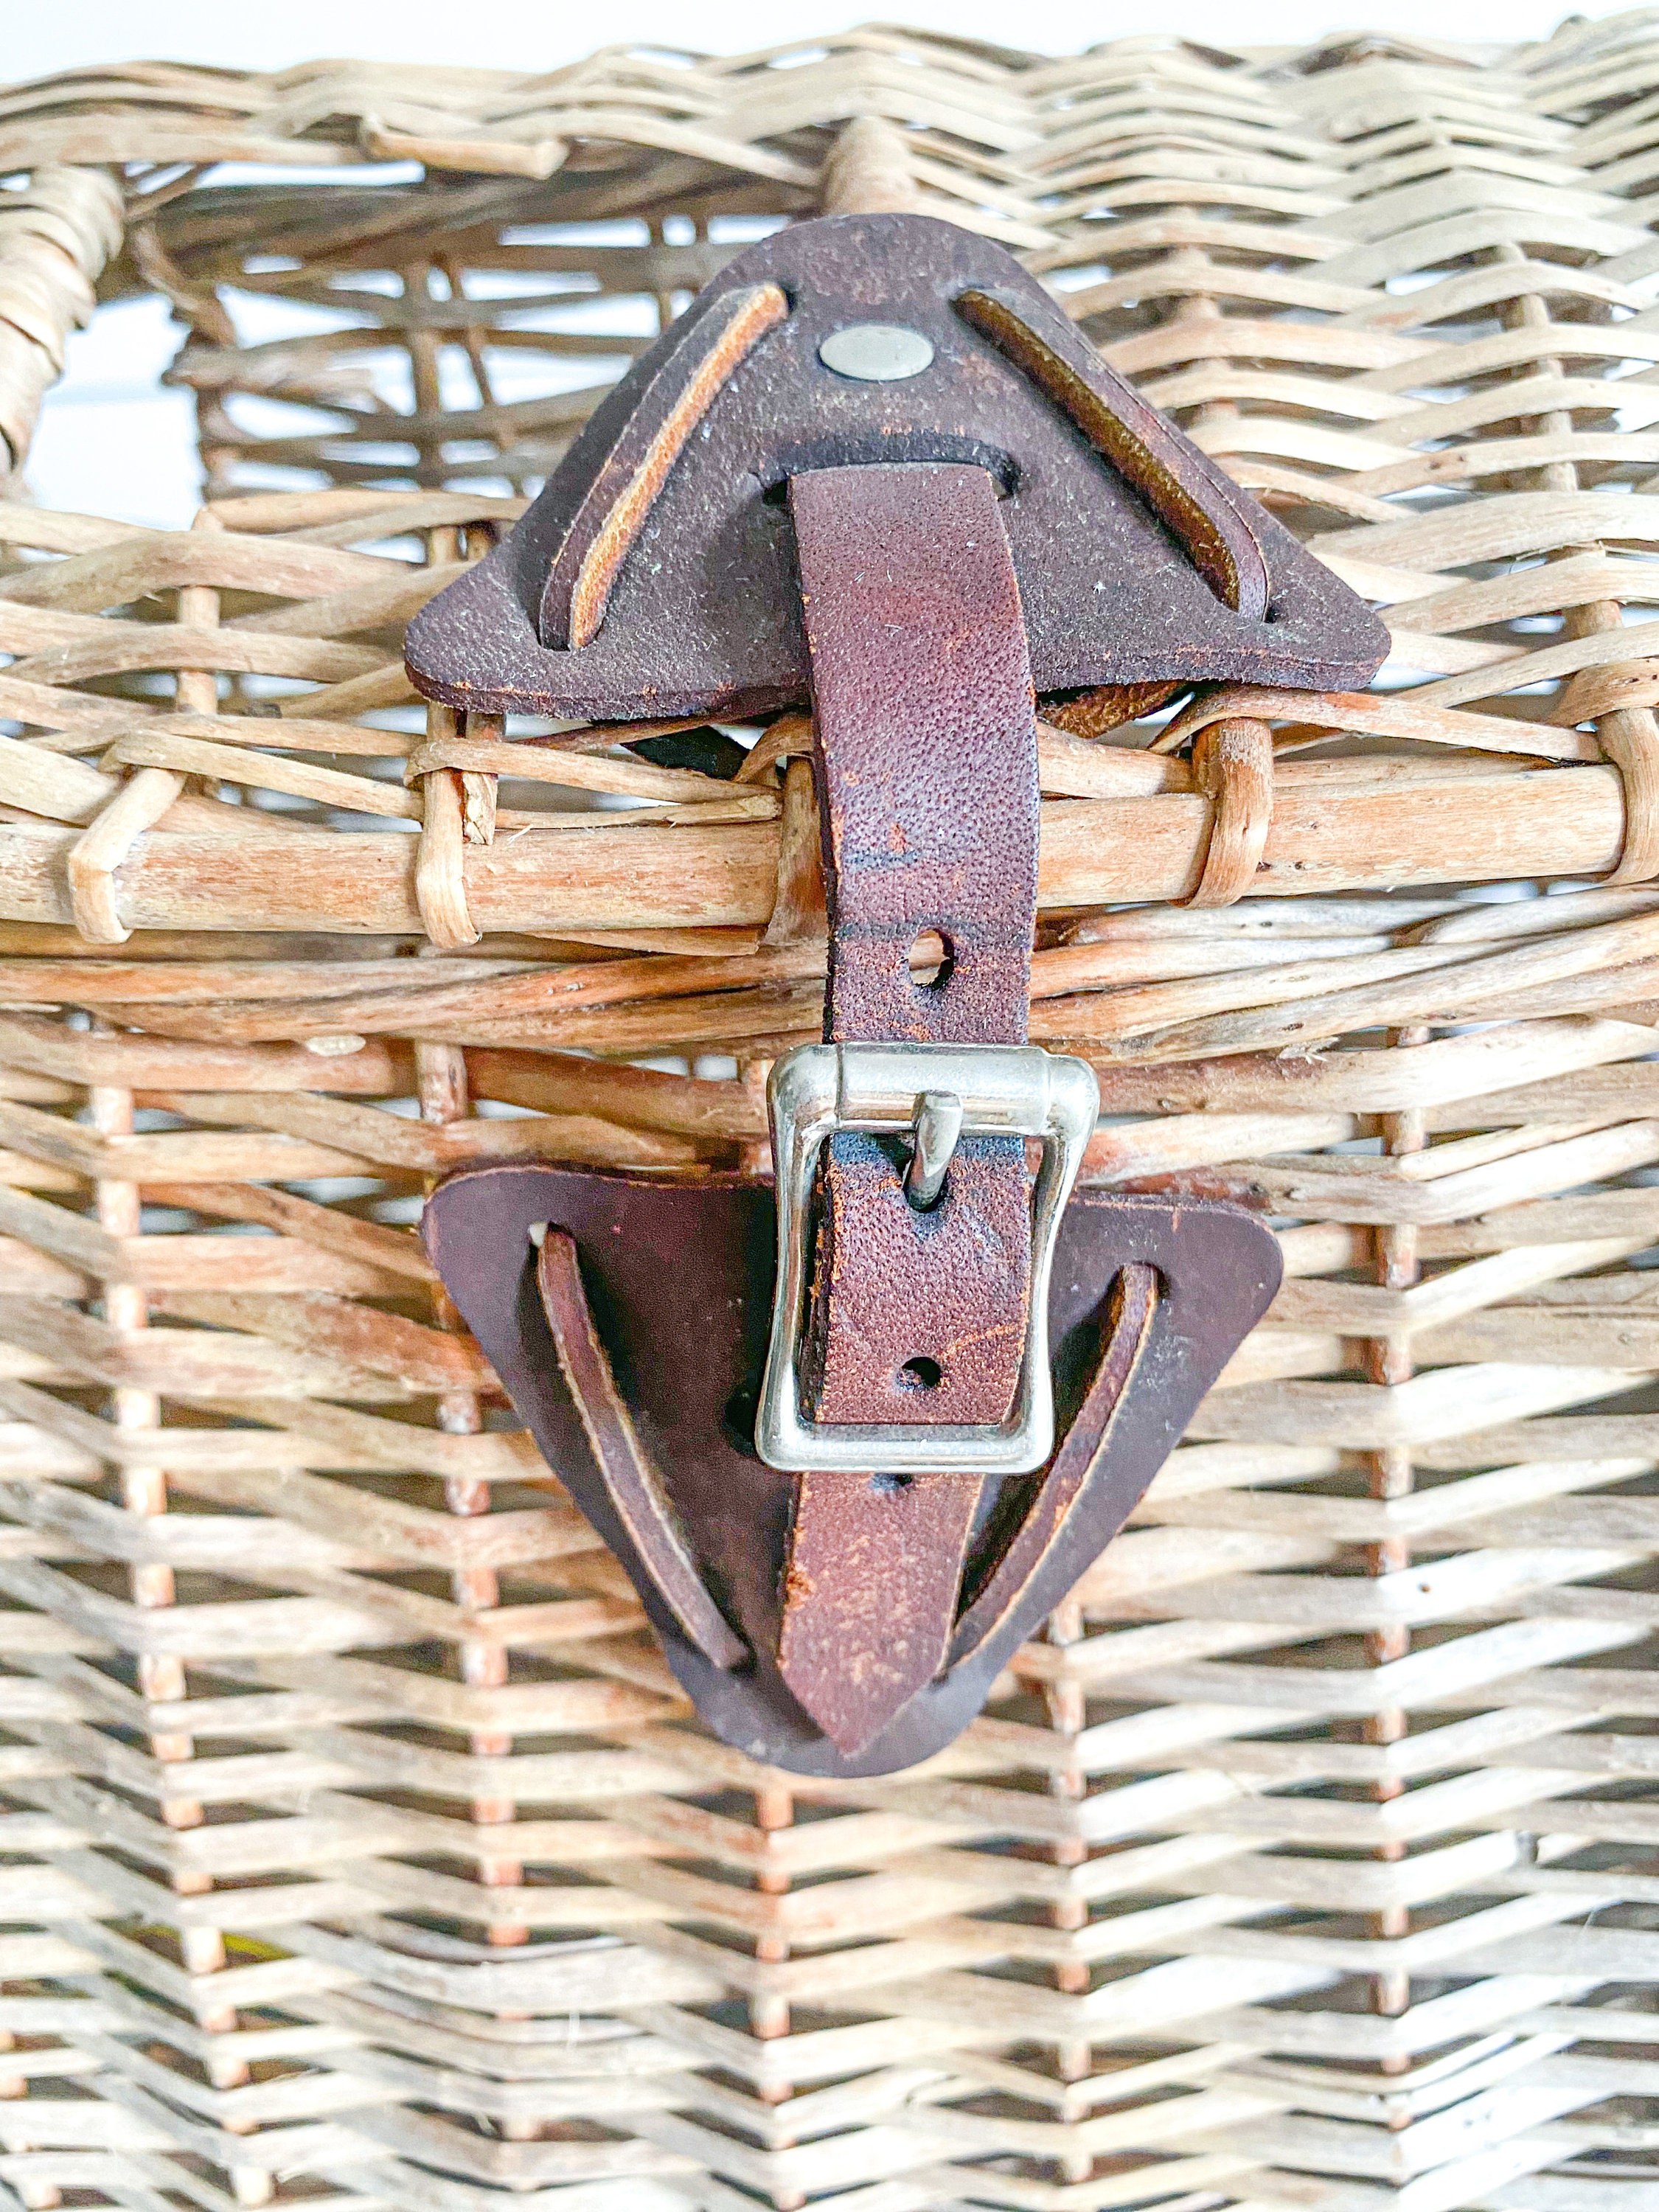 Vintage Wicker Fishing Creel Fish Basket W/ Leather Clasp Vintage Fishing  Gear Hanging Basket Wall Decor Rustic Cabin, Lake House Decor 